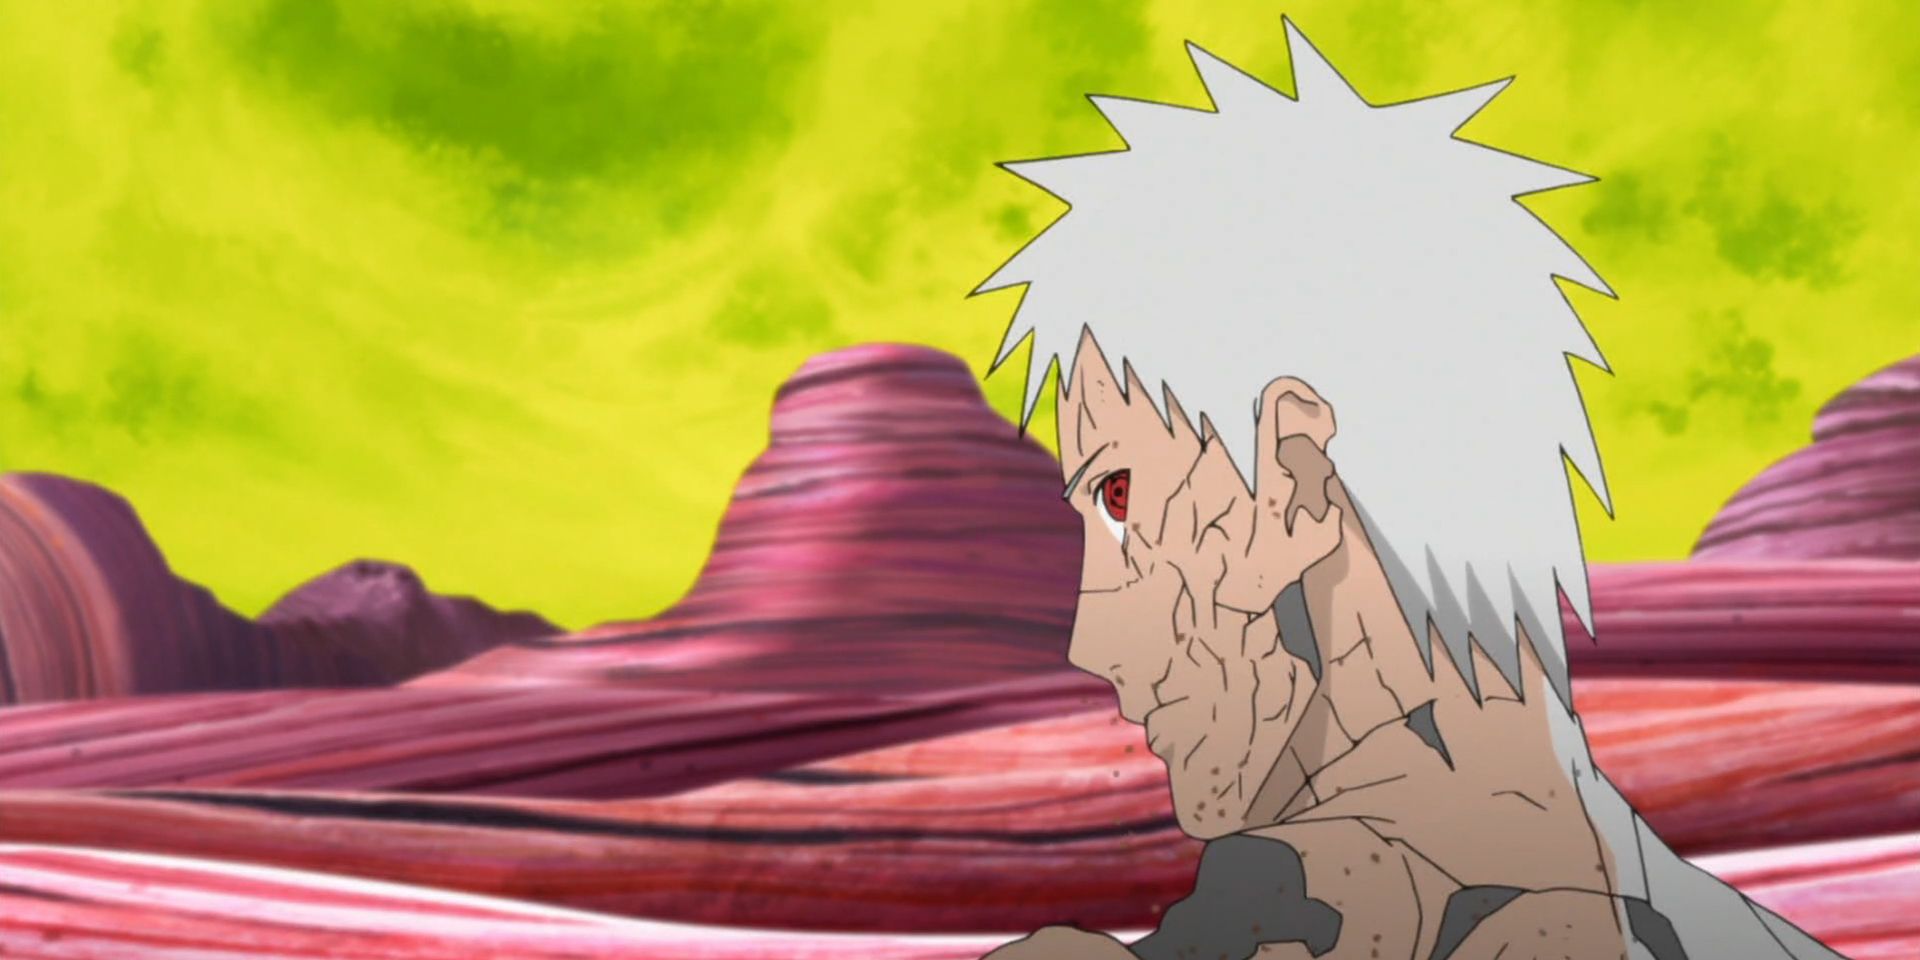 The villain Obito from the Naruto anime.